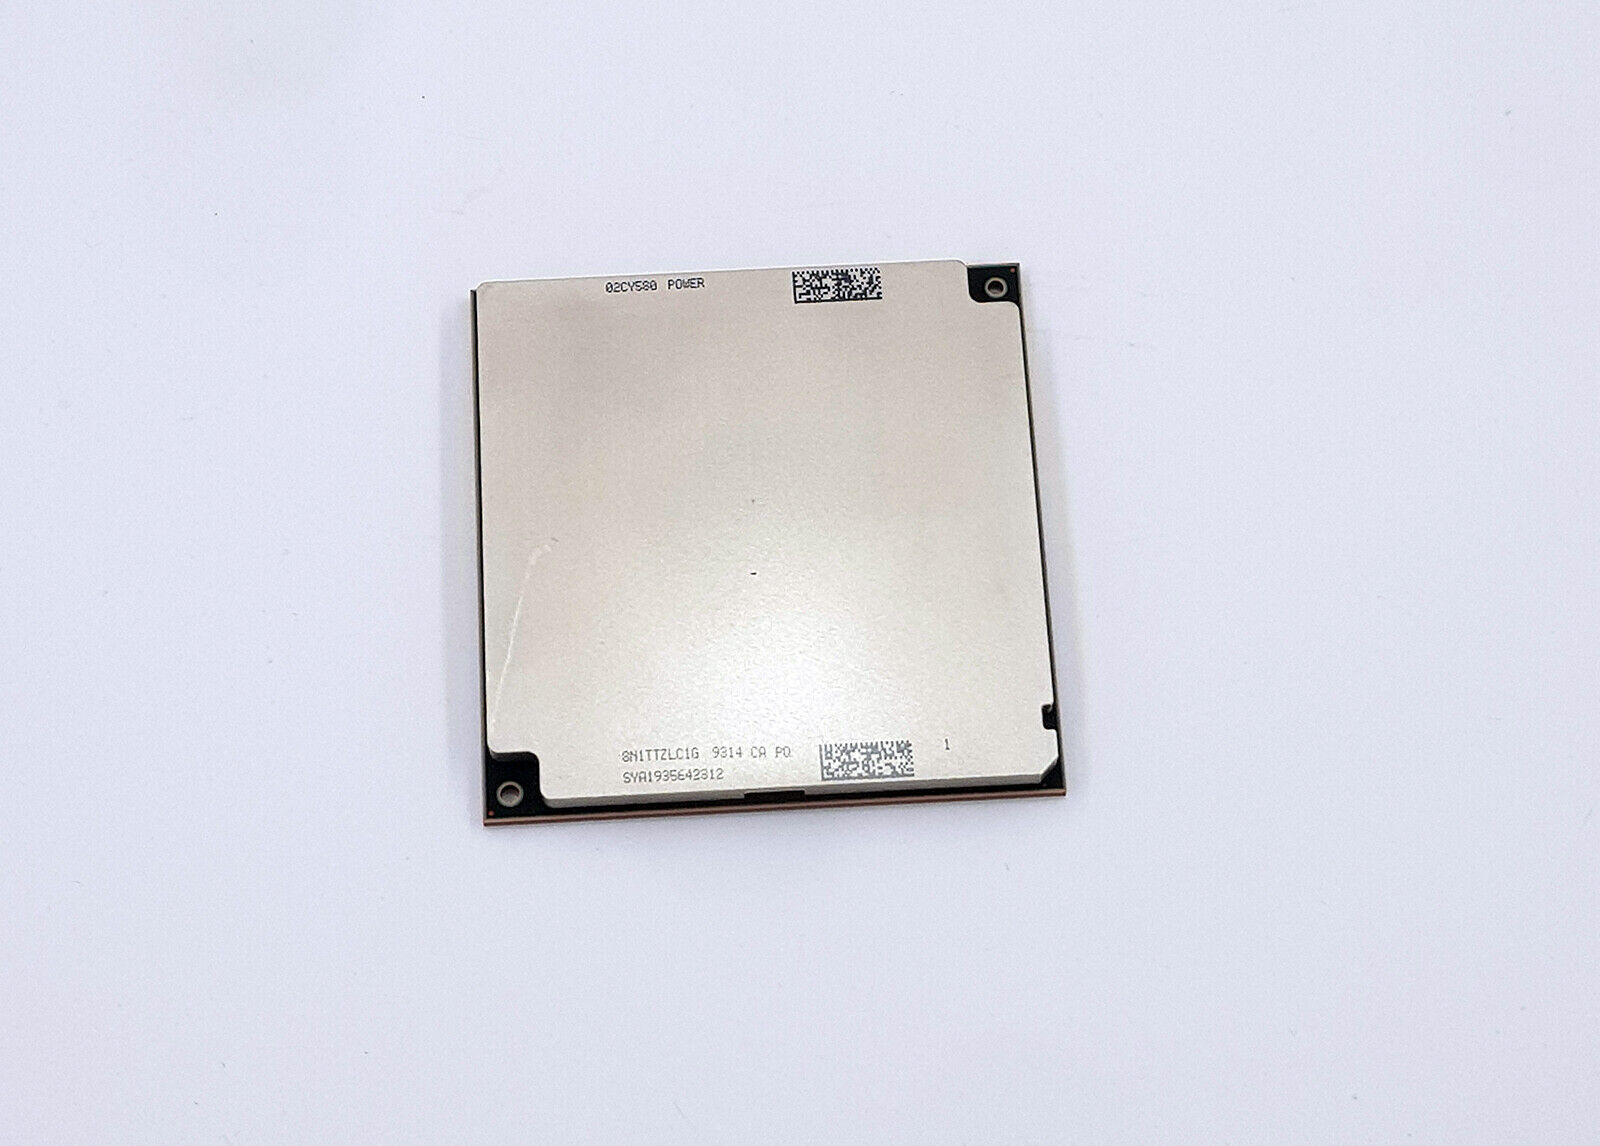 IBM Power9 CPU Processor Module 02CY580